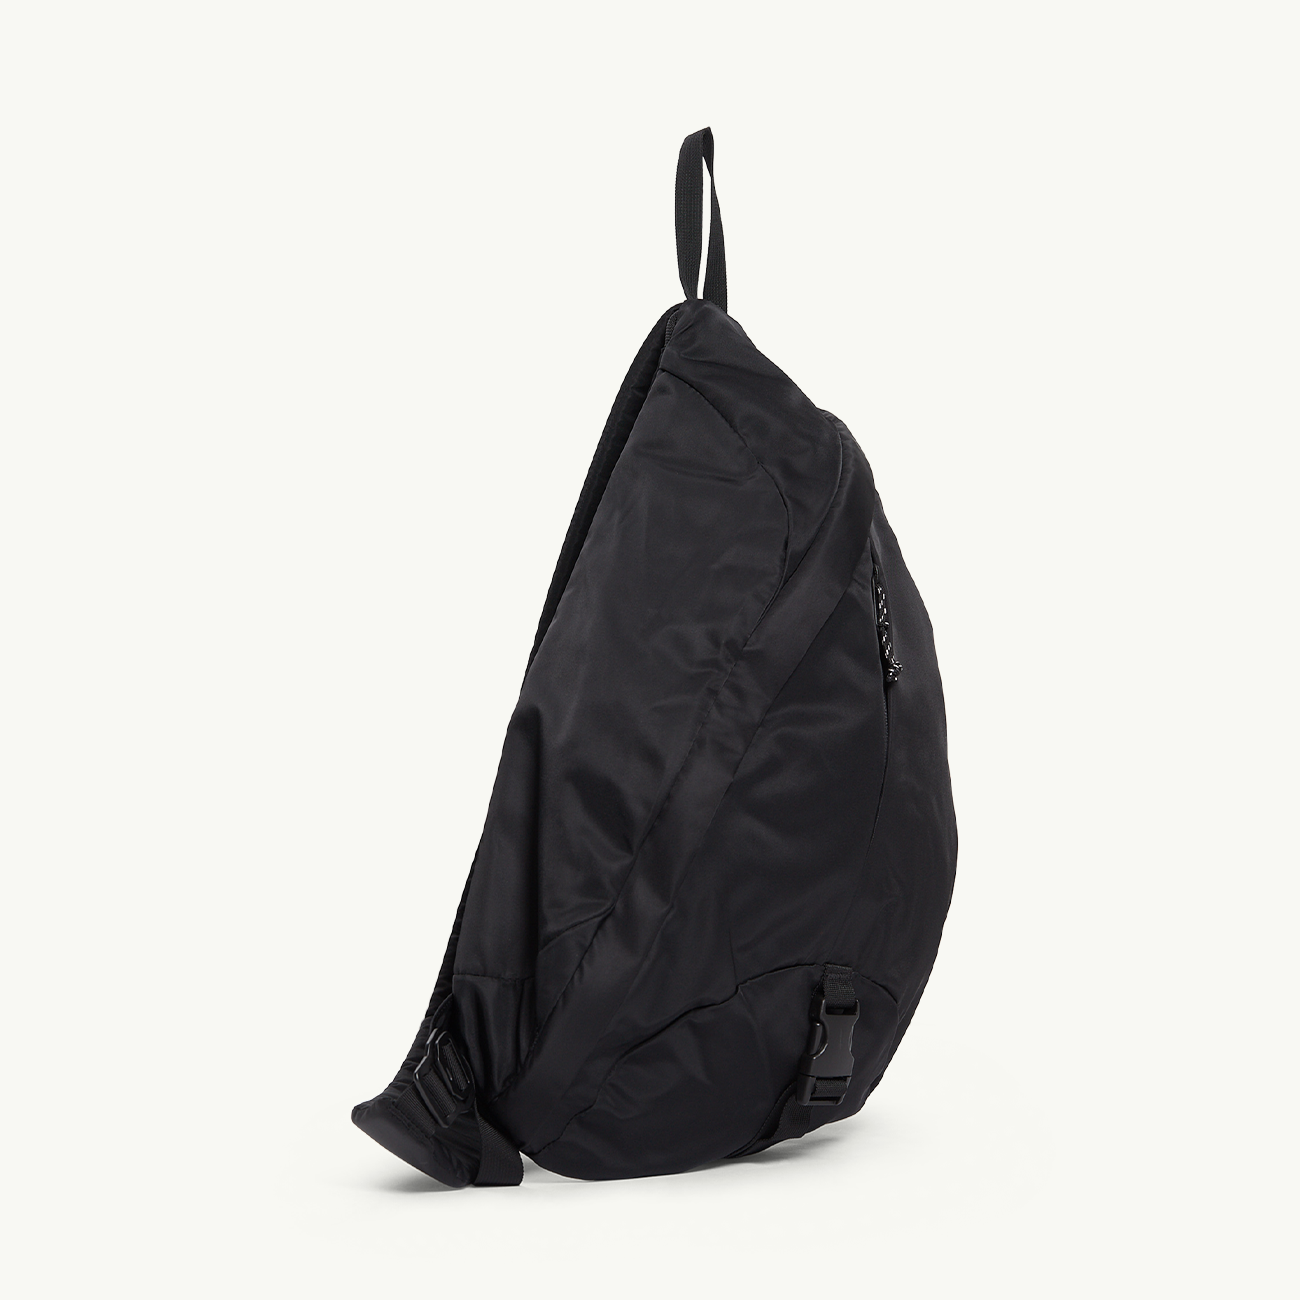 Tri Point Bag - Black